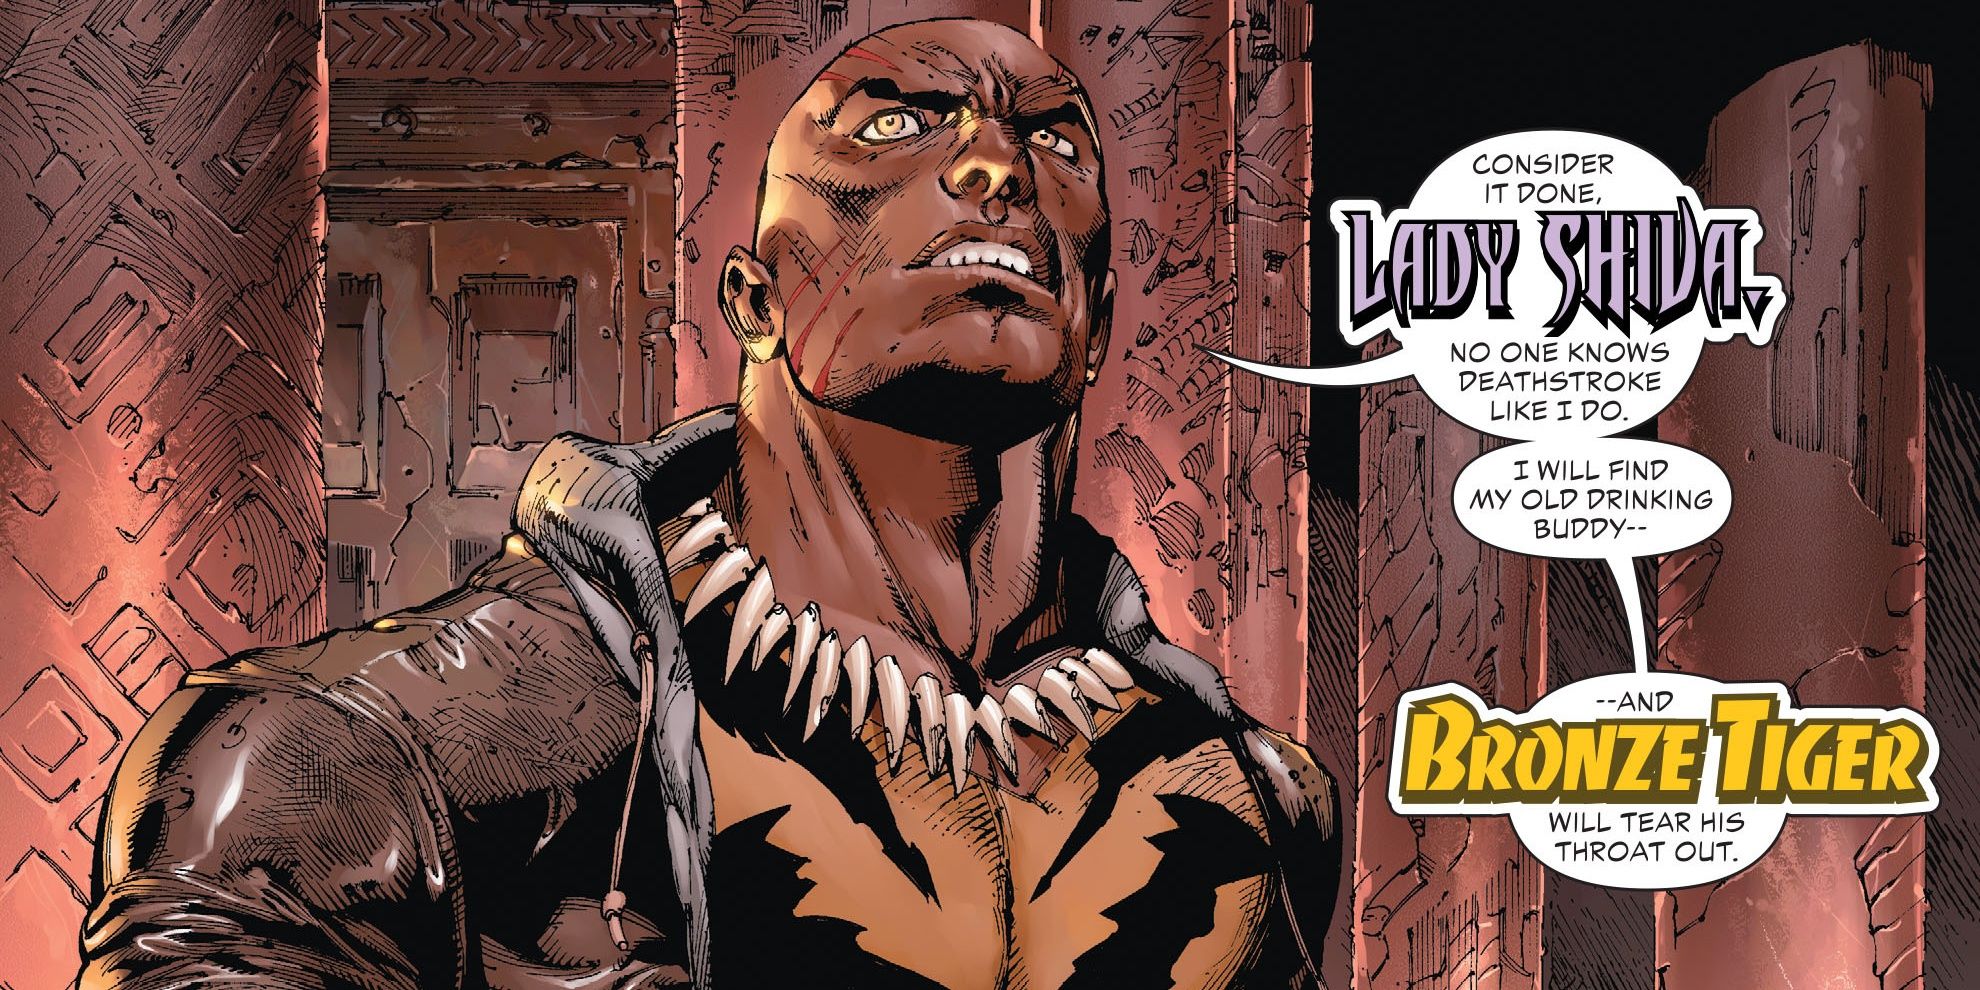 Bronze Tiger in DC Comics